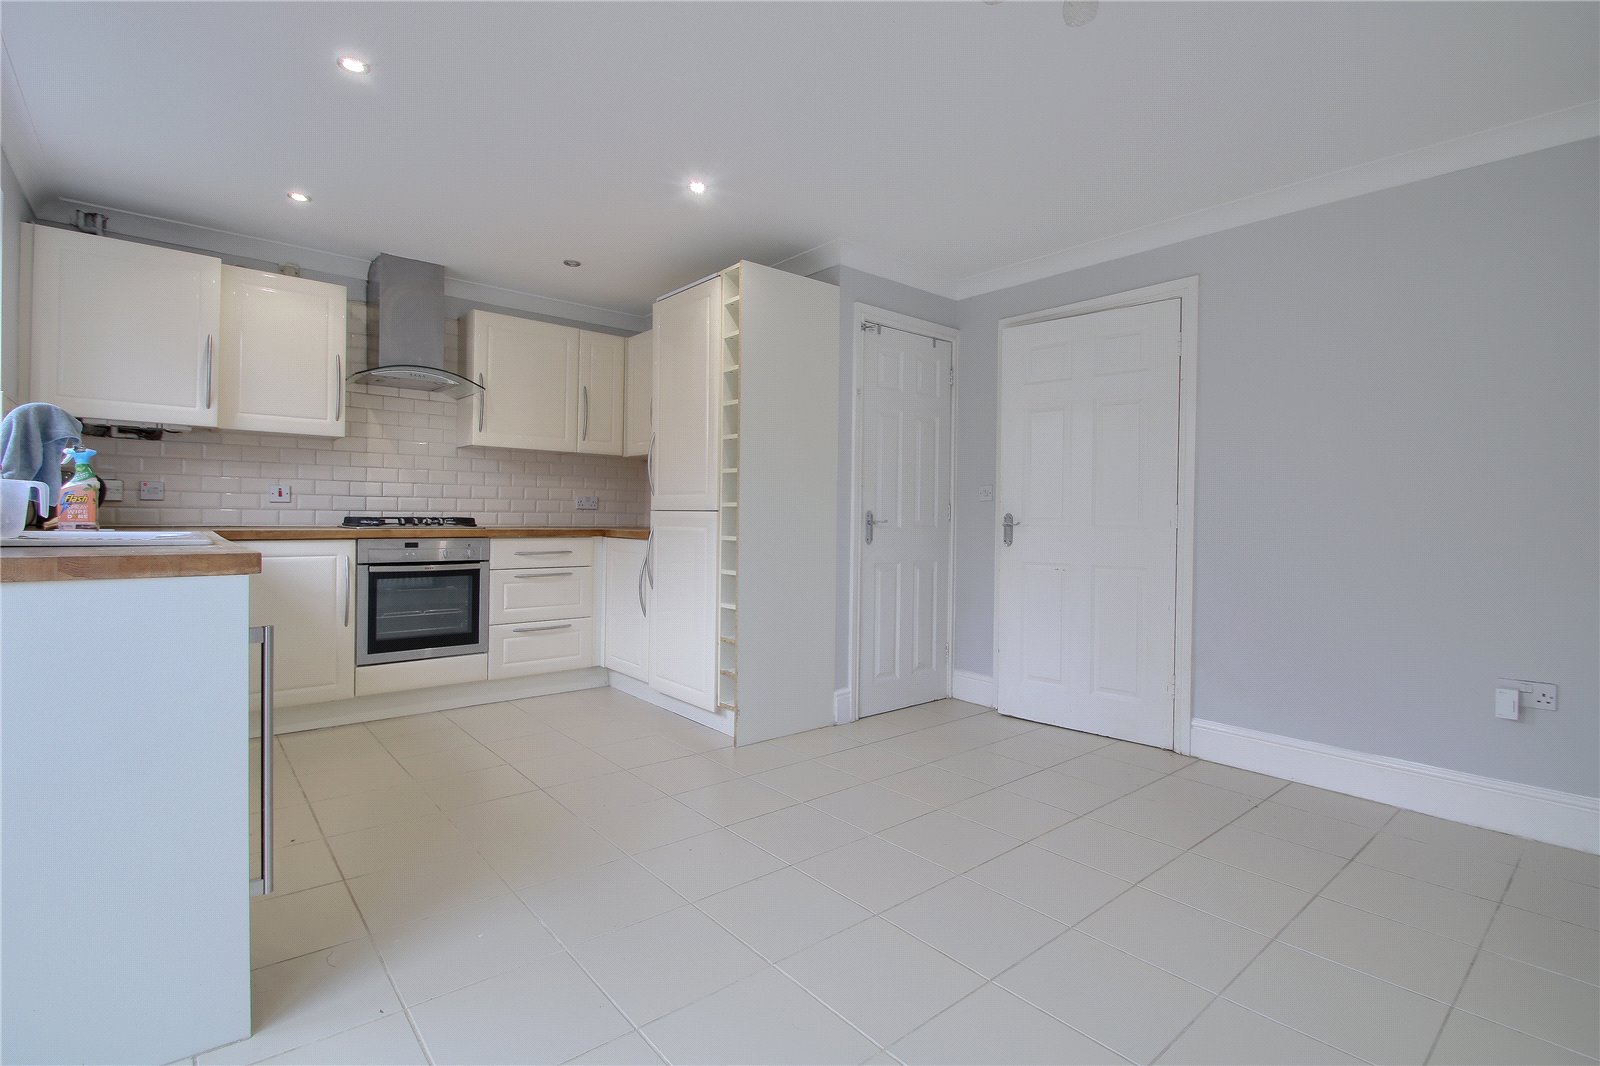 4 bed house for sale in Lullingstone Crescent, Ingleby Barwick  - Property Image 3